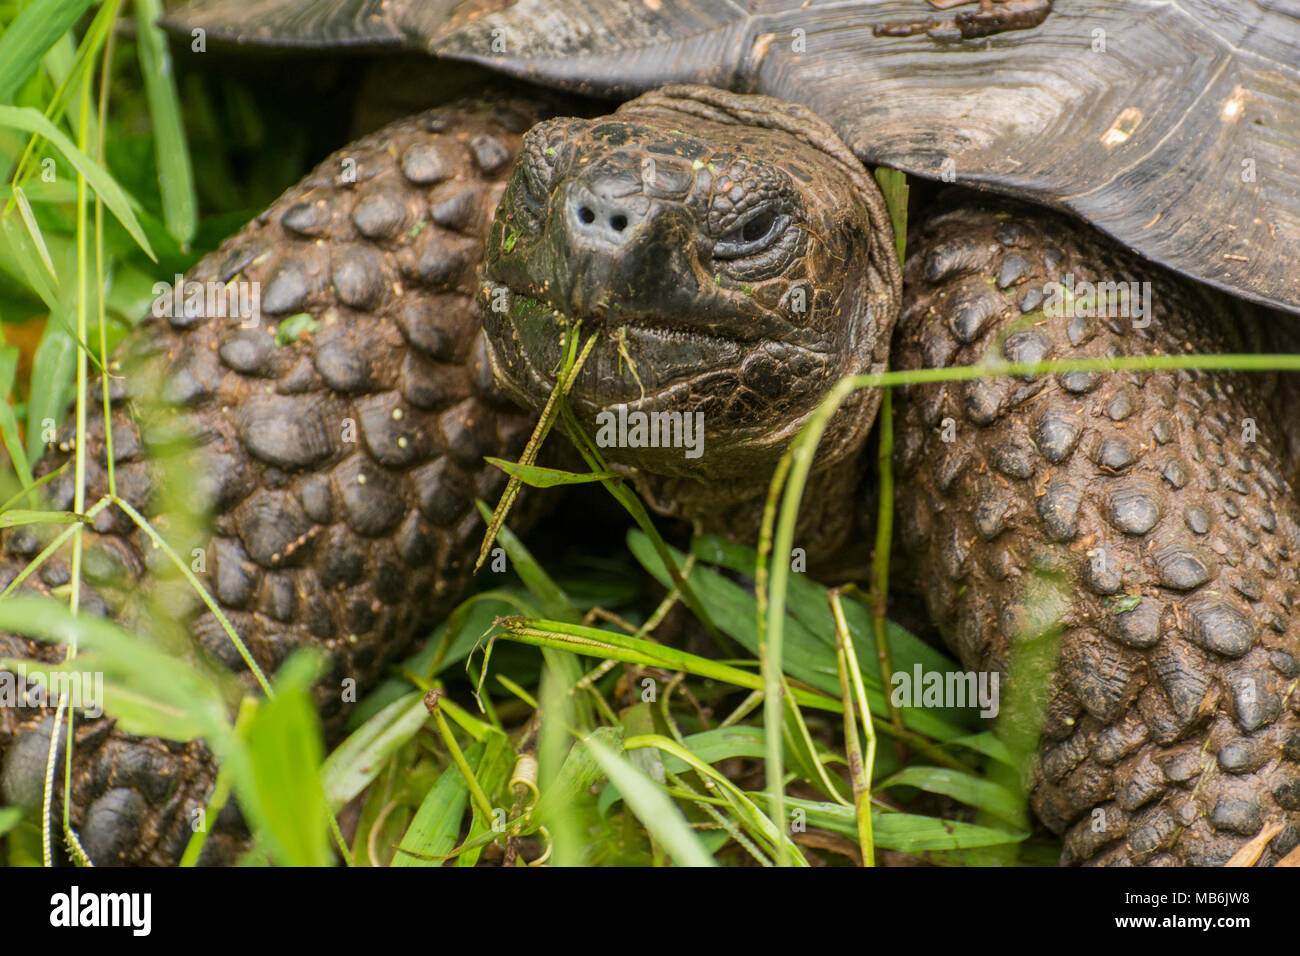 A galapagos giant tortoise (Chelonoidis nigra) munching on grass, these reptiles reach huge sizes, an example of island gigantism. Stock Photo